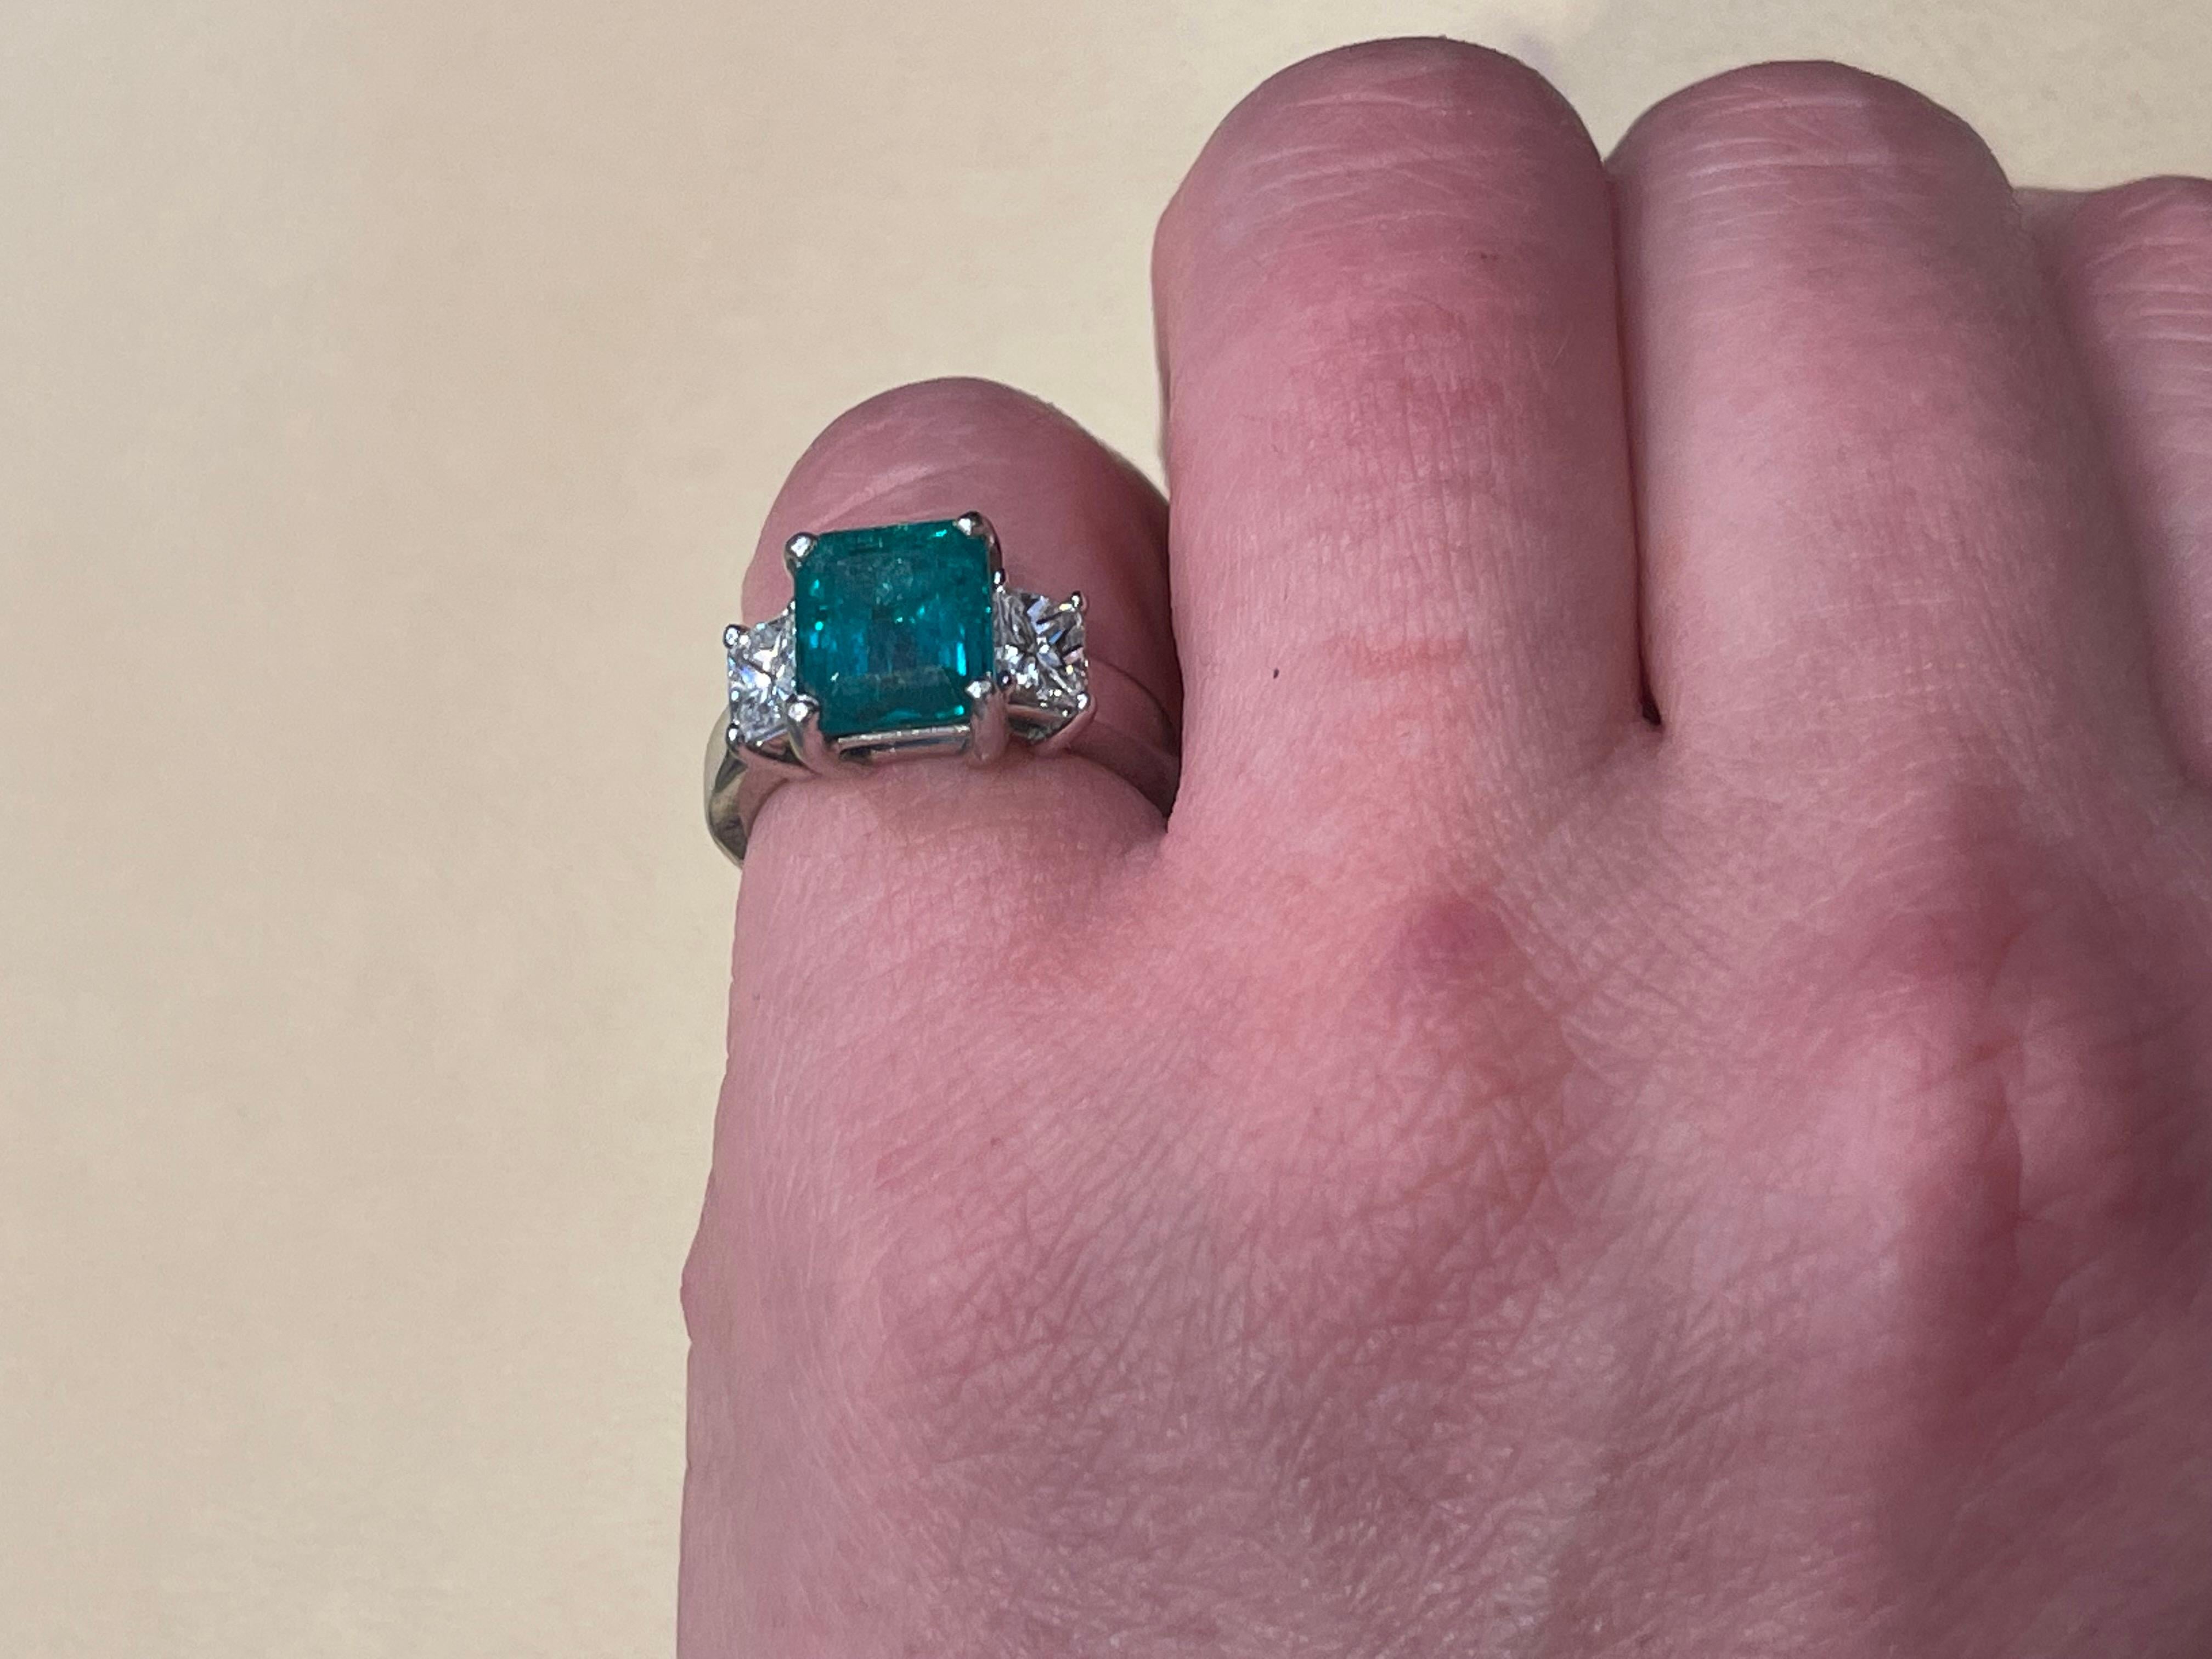 3 Carat Emerald Cut Colombian Emerald & 1.1 Ct Diamond Ring in 18K White Gold 4